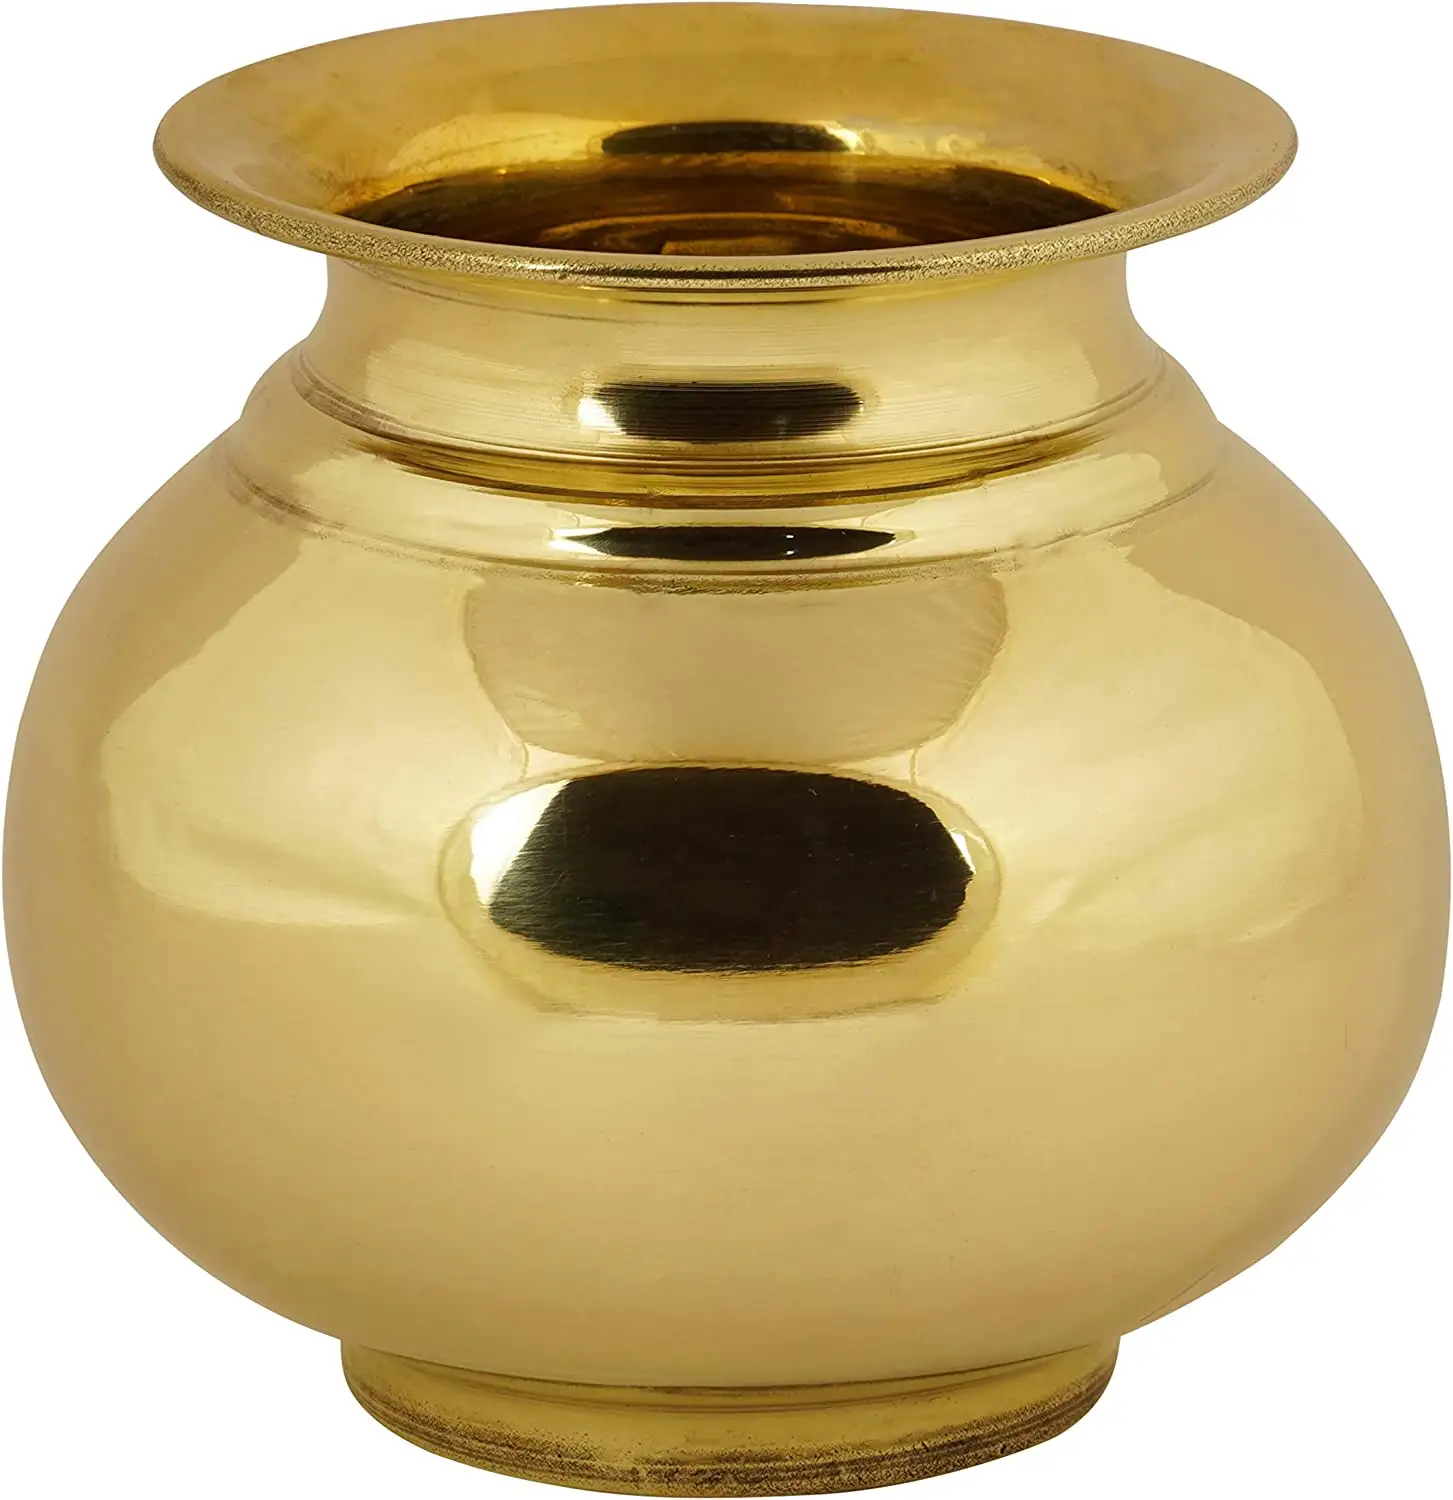 Indian Traditional Lota For Puja Handmade Brass Vessel Kalash Pot Traditional Auspicious Gift For Hindu Pooja